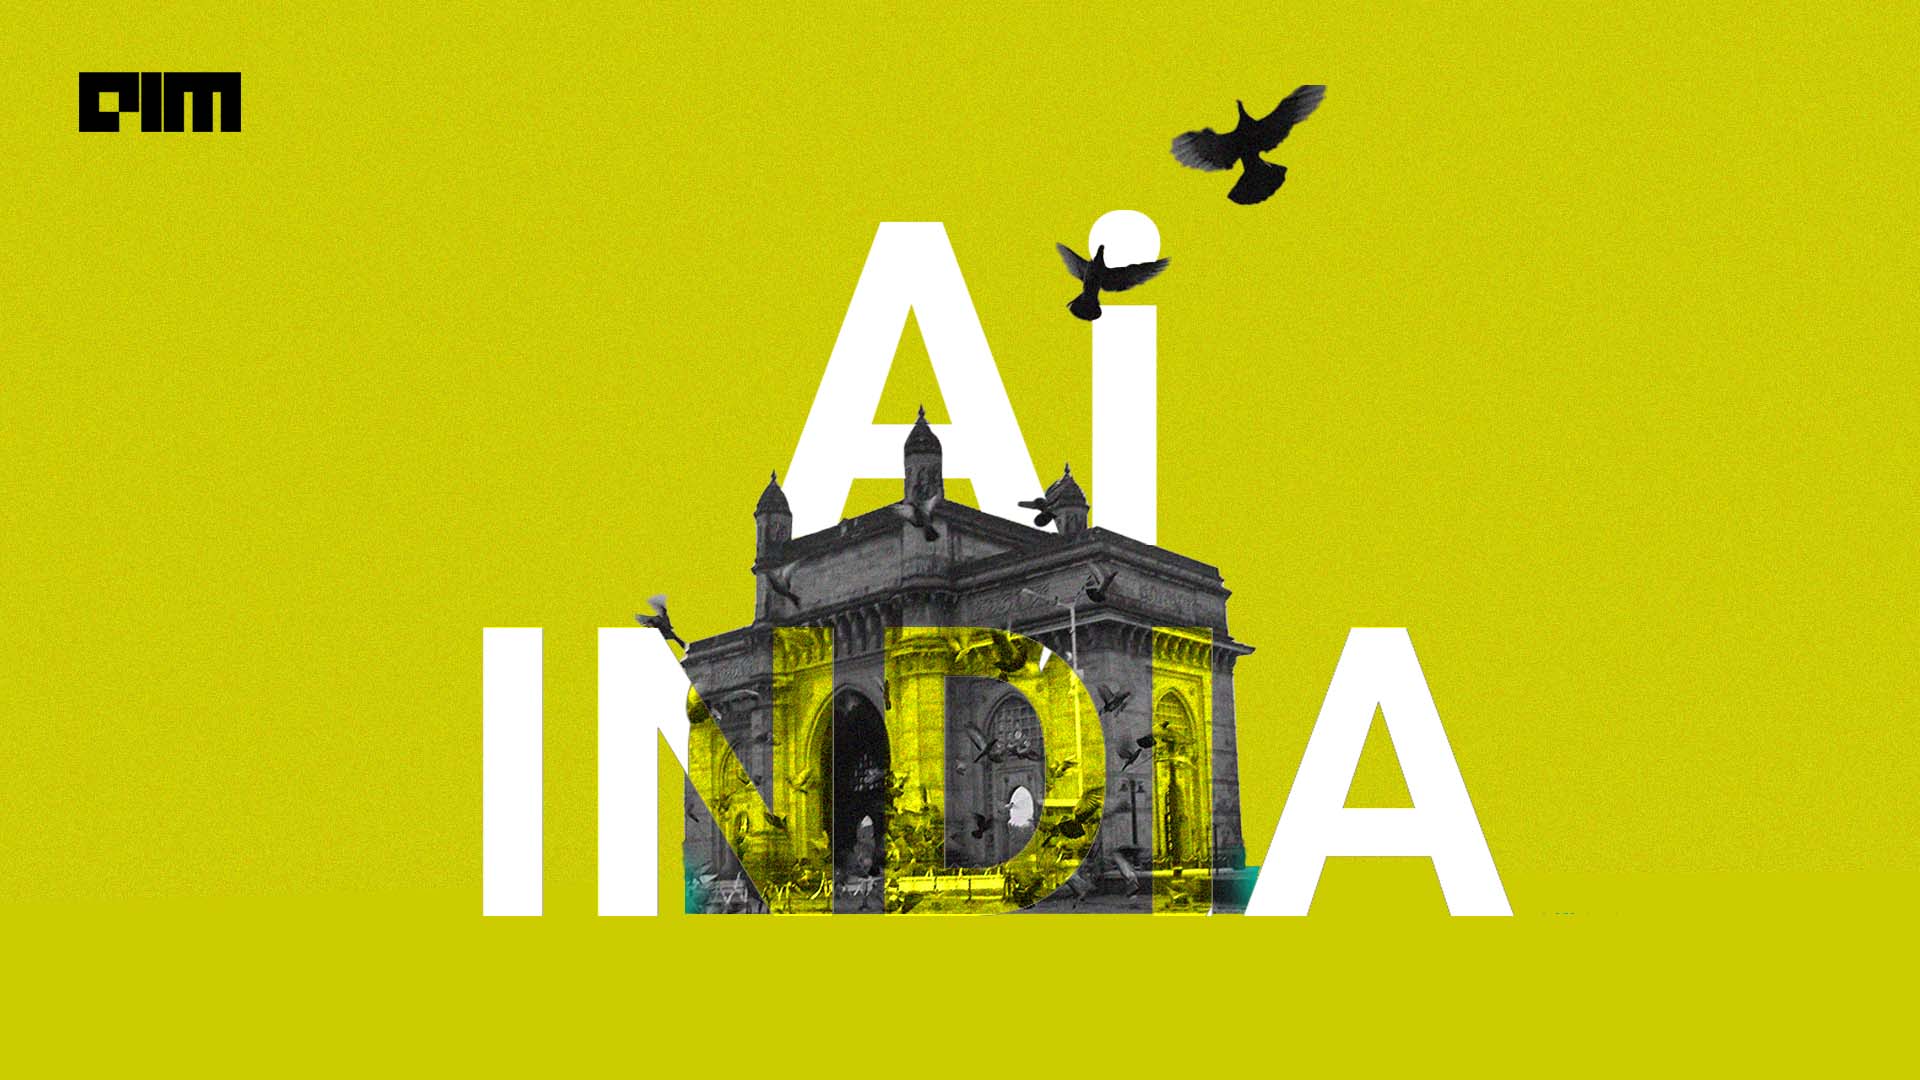 India Catapults the AI Mission